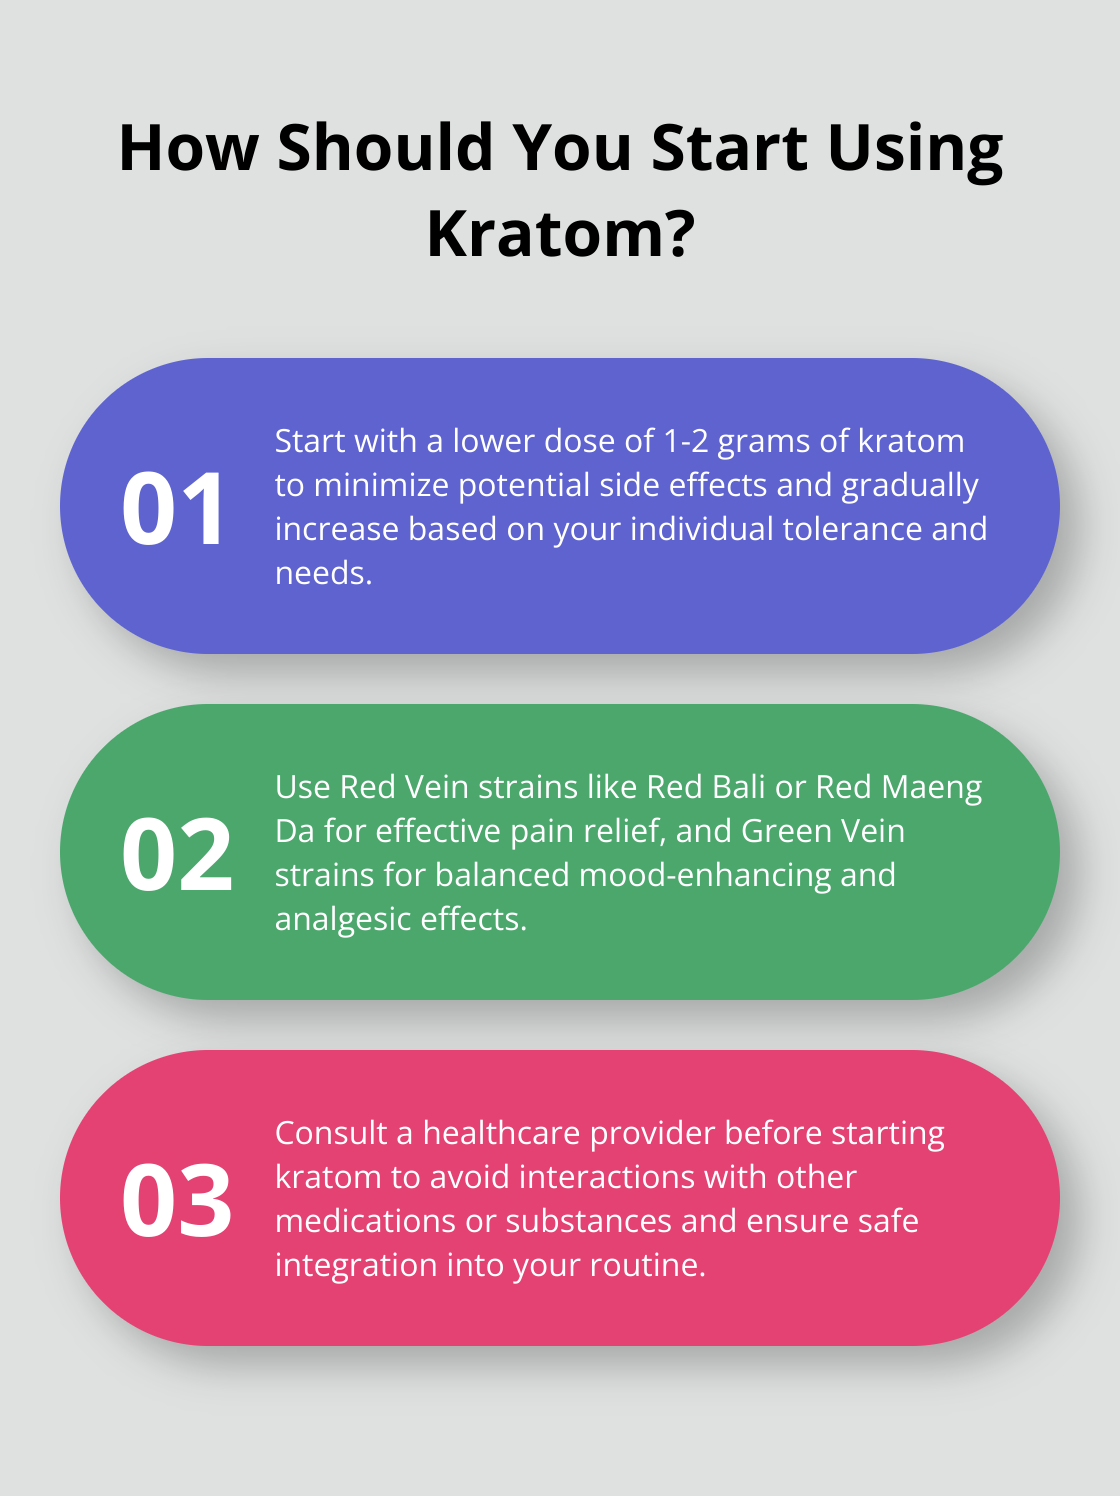 Fact - How Should You Start Using Kratom?